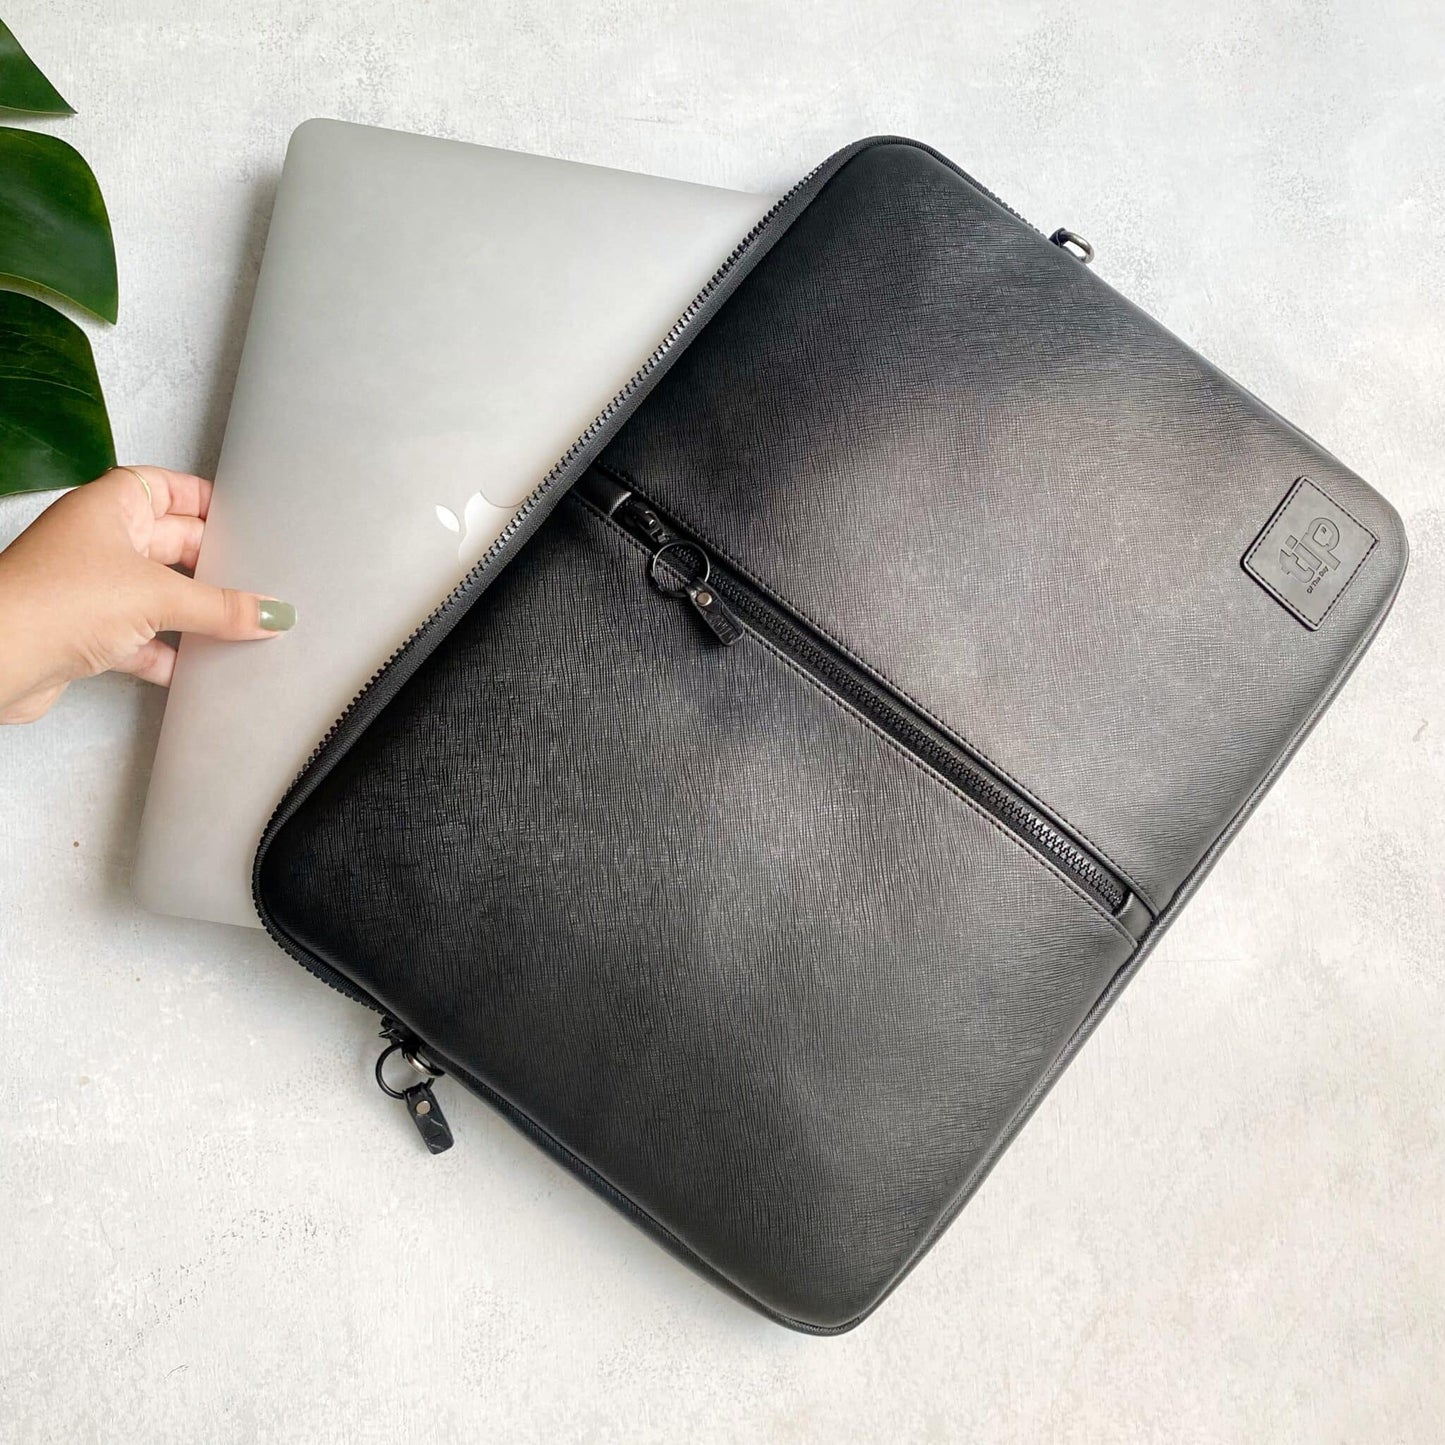 Luxury leather laptop bag